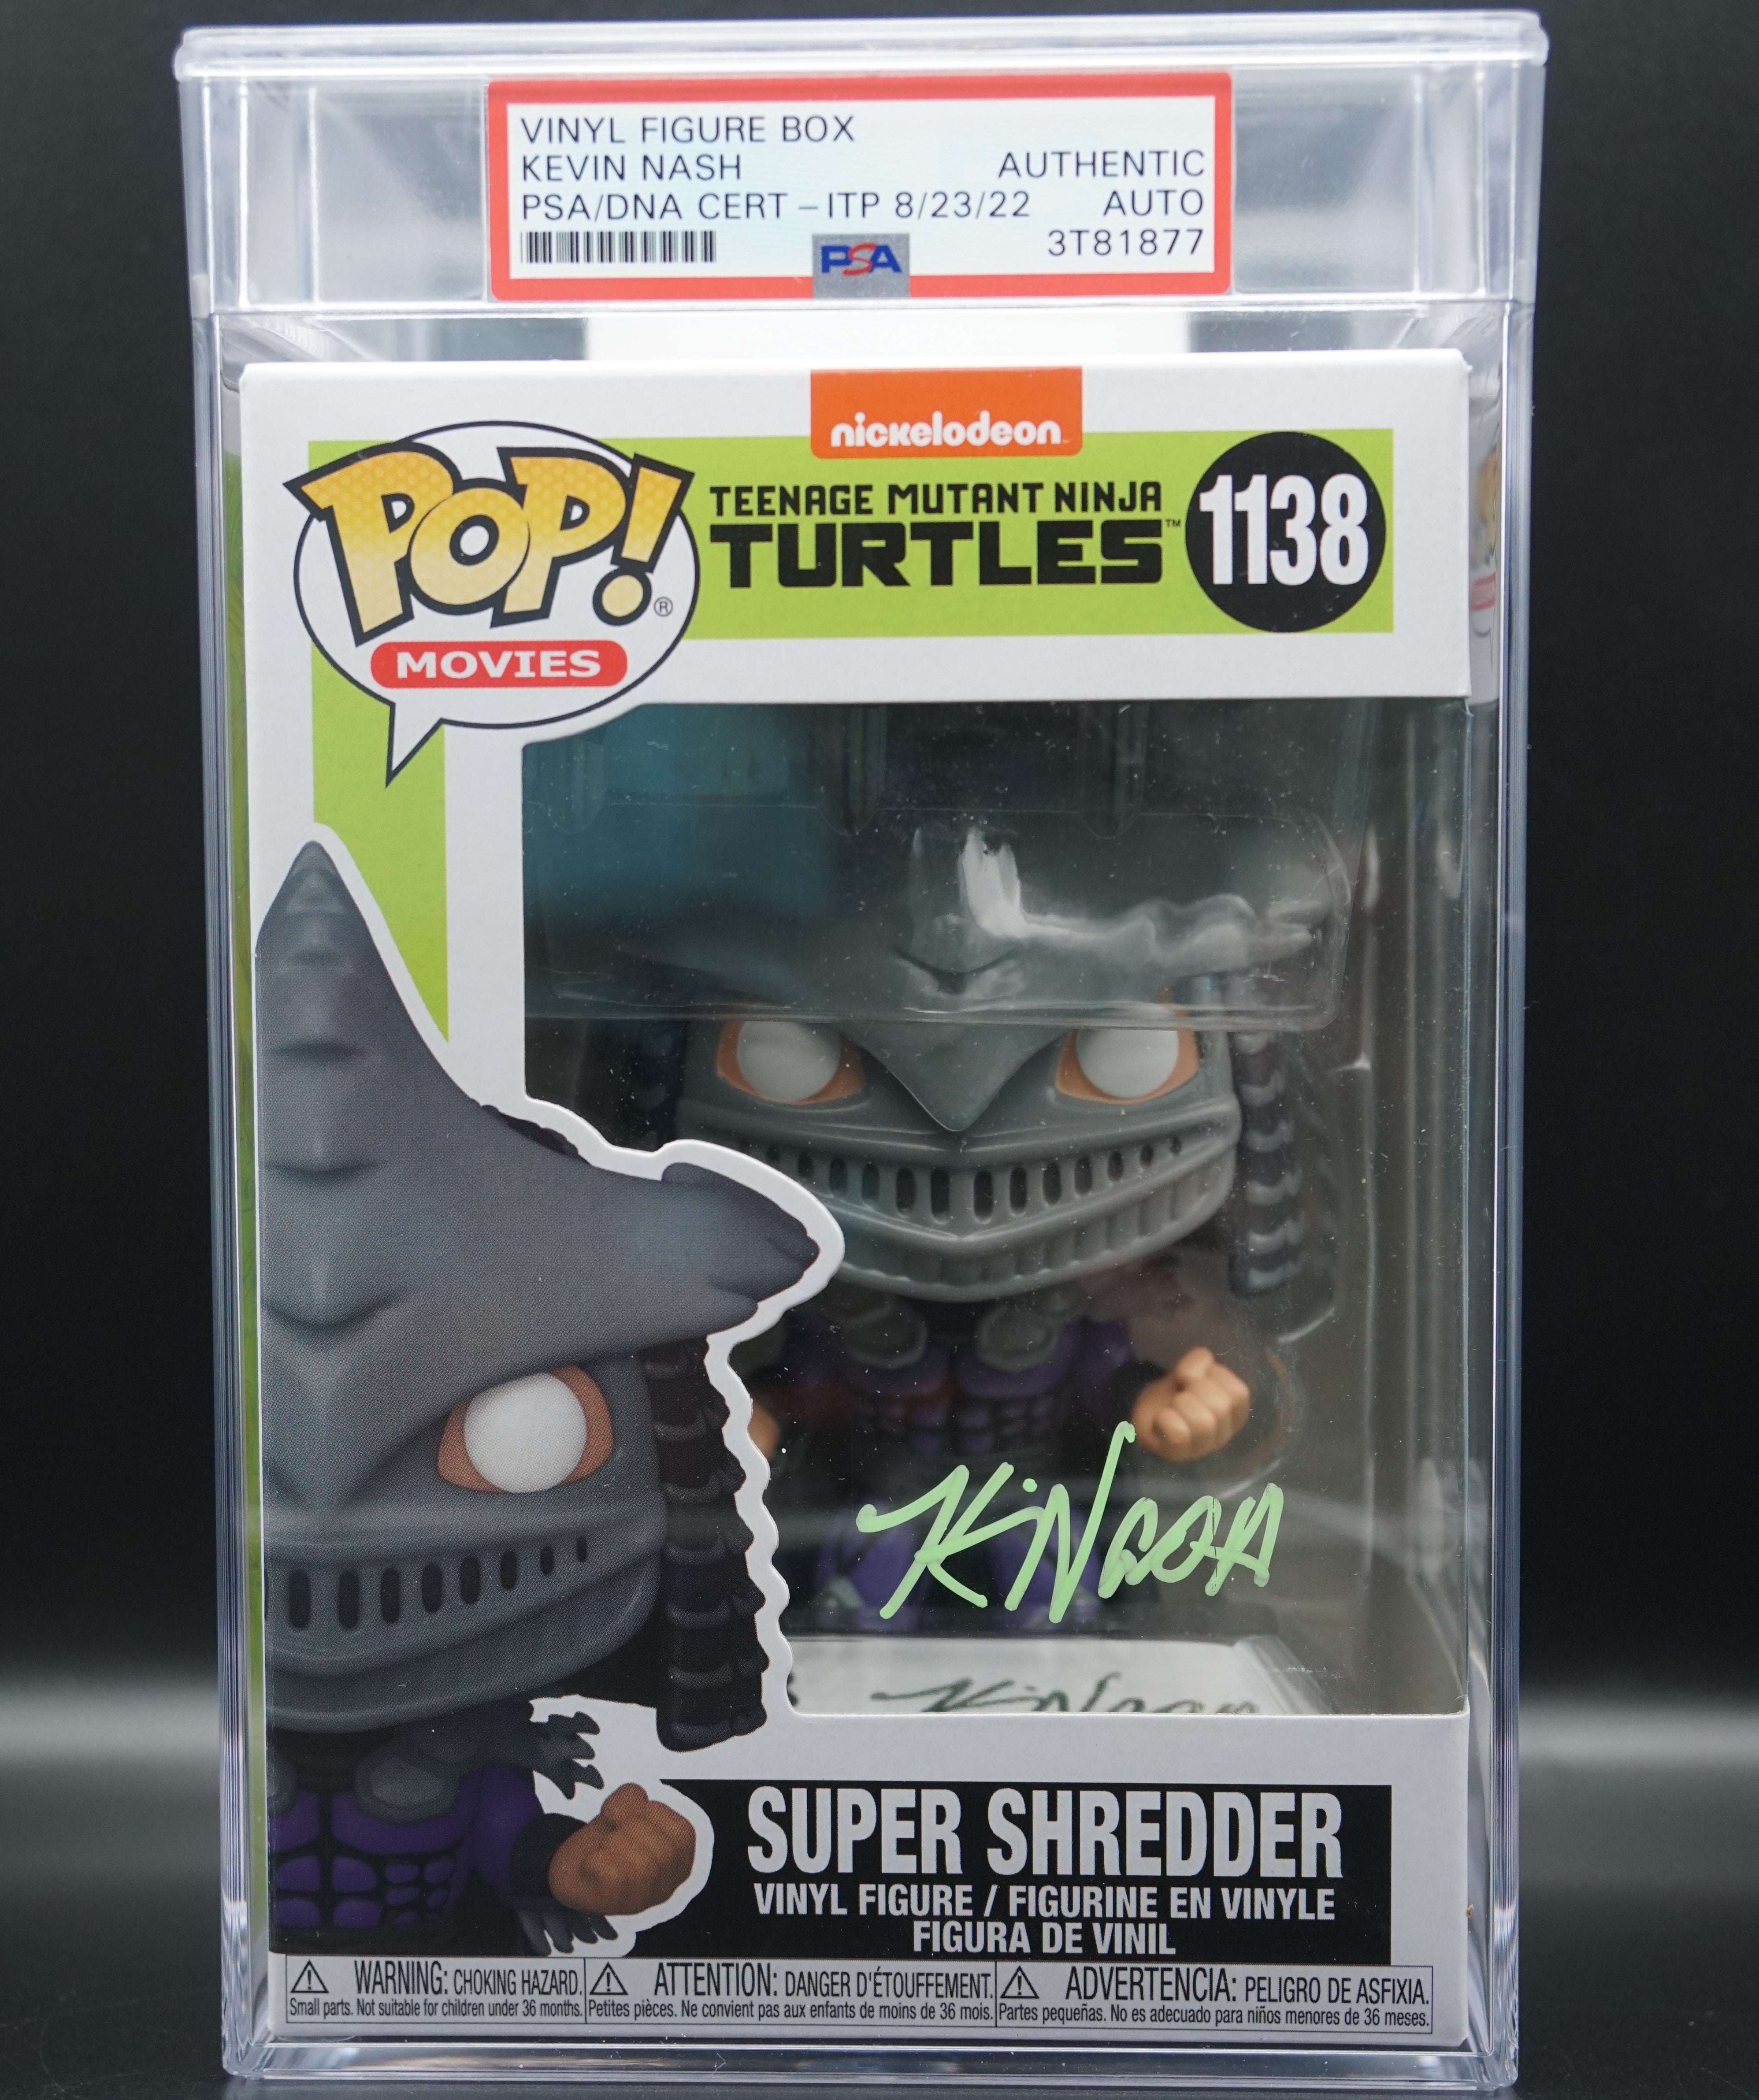 Encapsulated Super Shredder #1138 Neon Green Paint Pen PSA COA - Signed By Kevin Nash